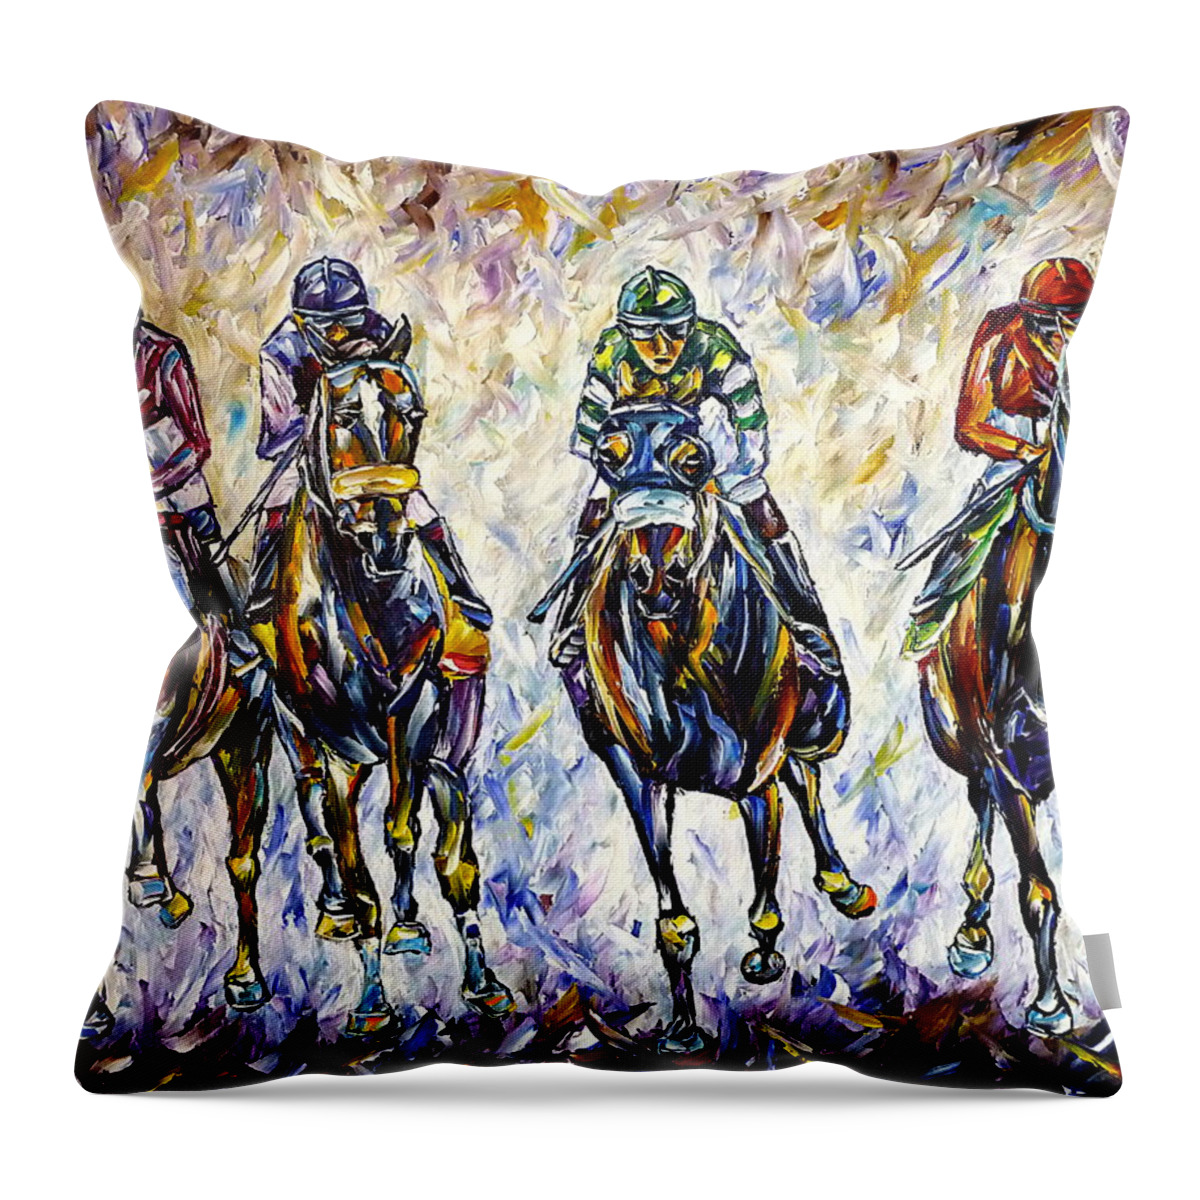 I Love Horses Throw Pillow featuring the painting Horse Race by Mirek Kuzniar